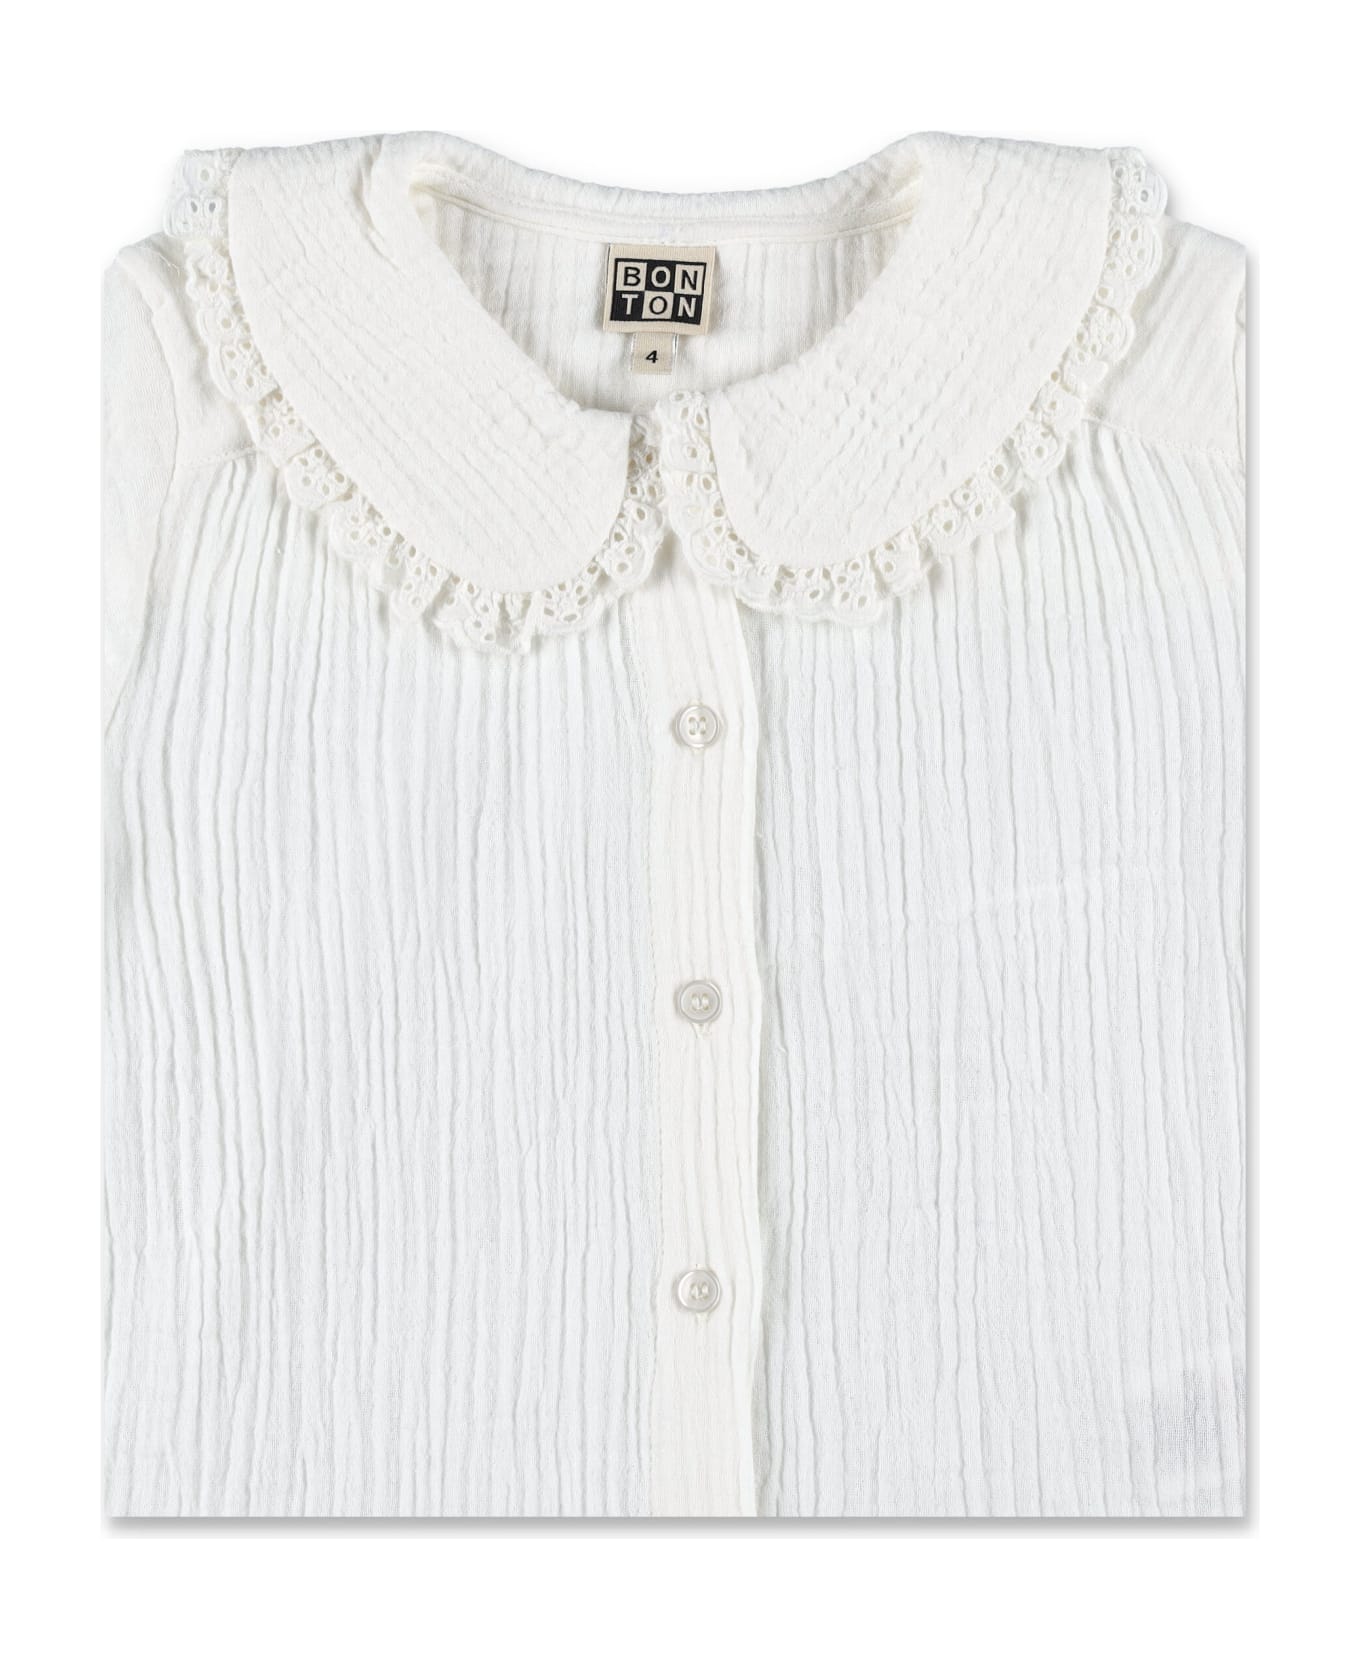 Bonton Shirt - WHITE シャツ